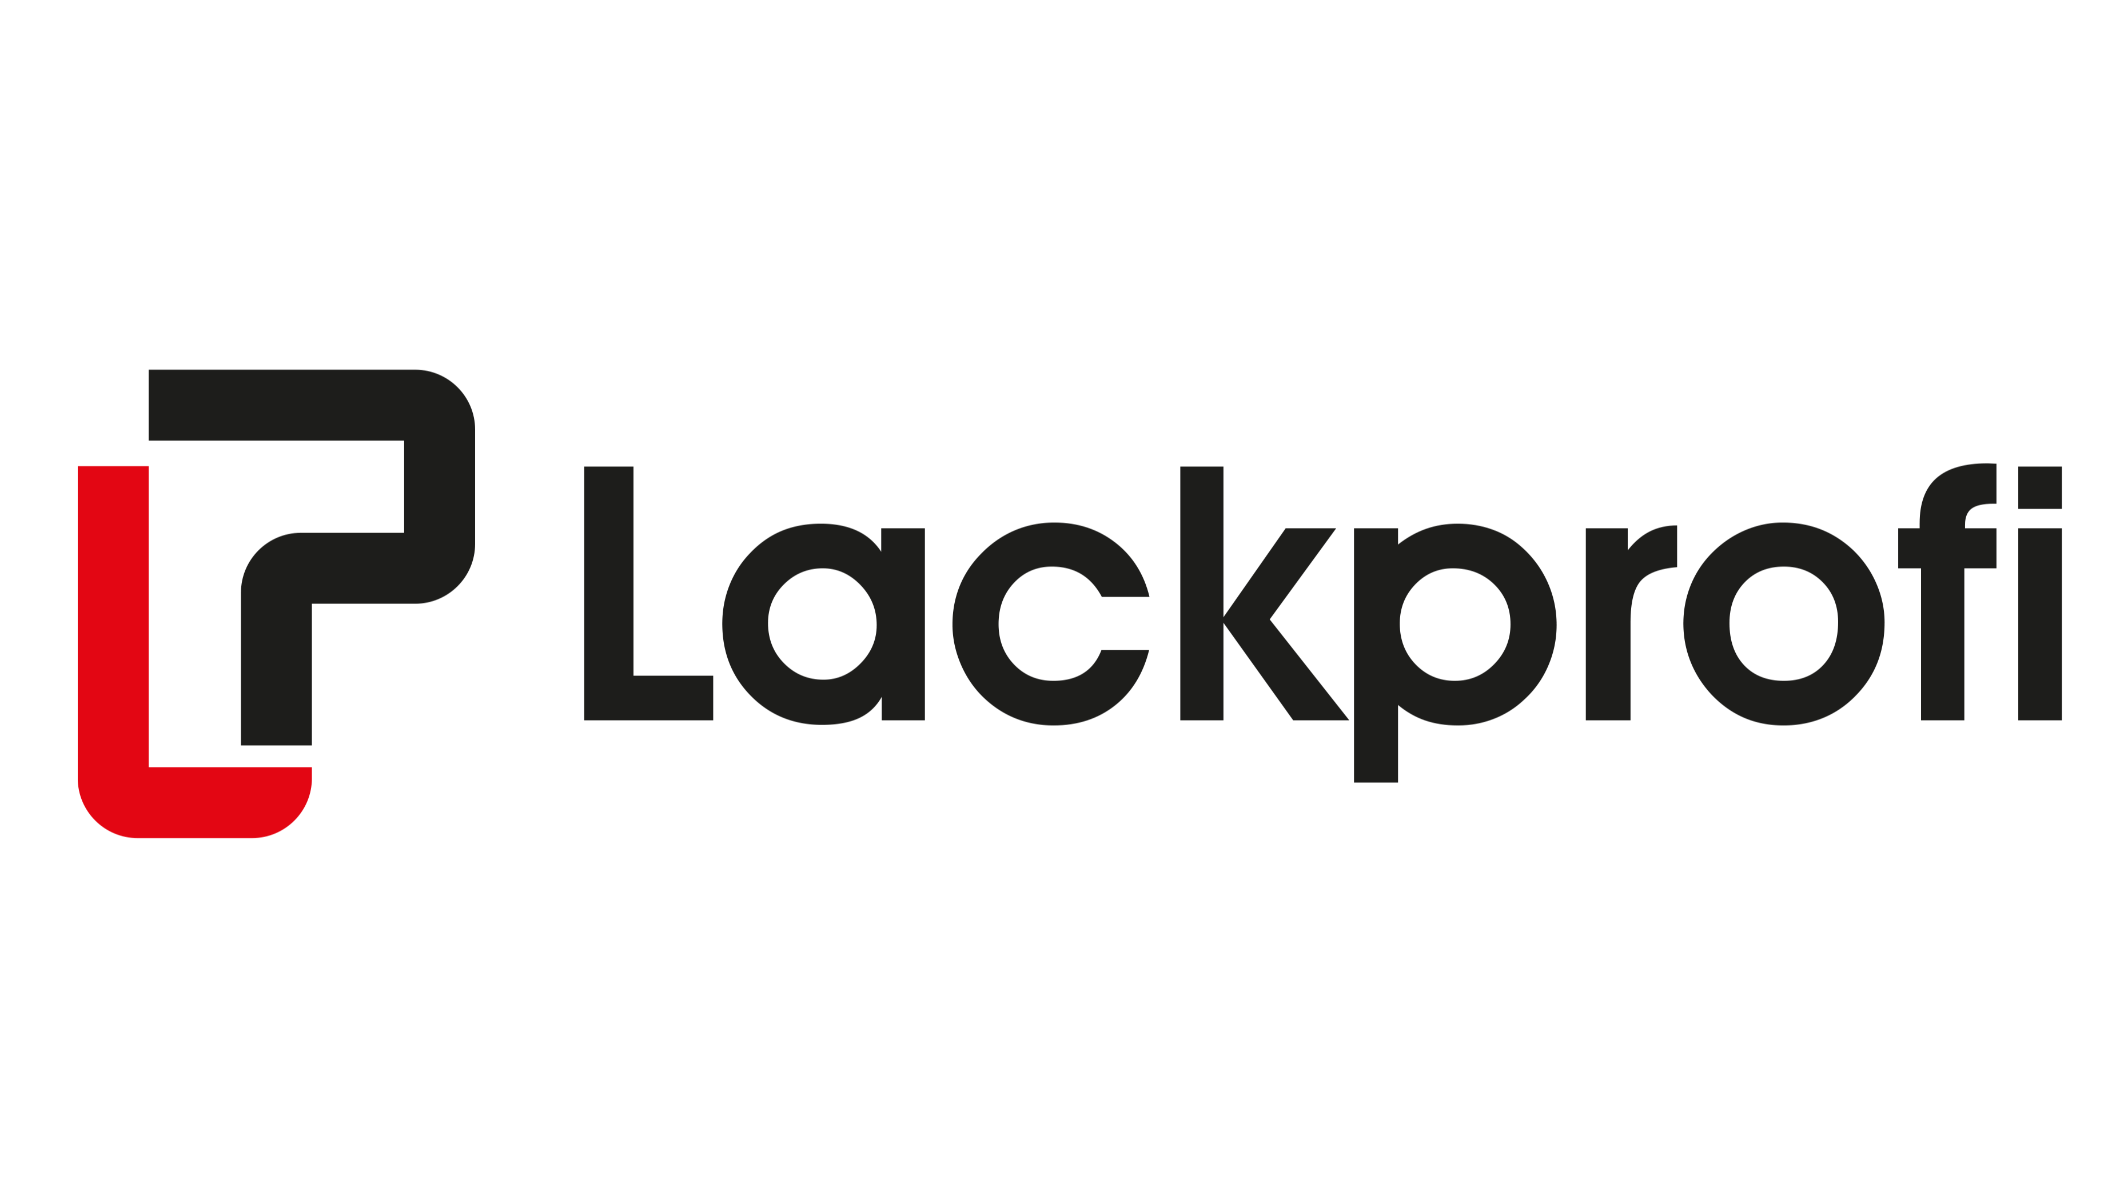 Lackprofi GmbH Karosserie & Autolackierei Betrieb, Klausnerring 22 in Kirchheim bei München